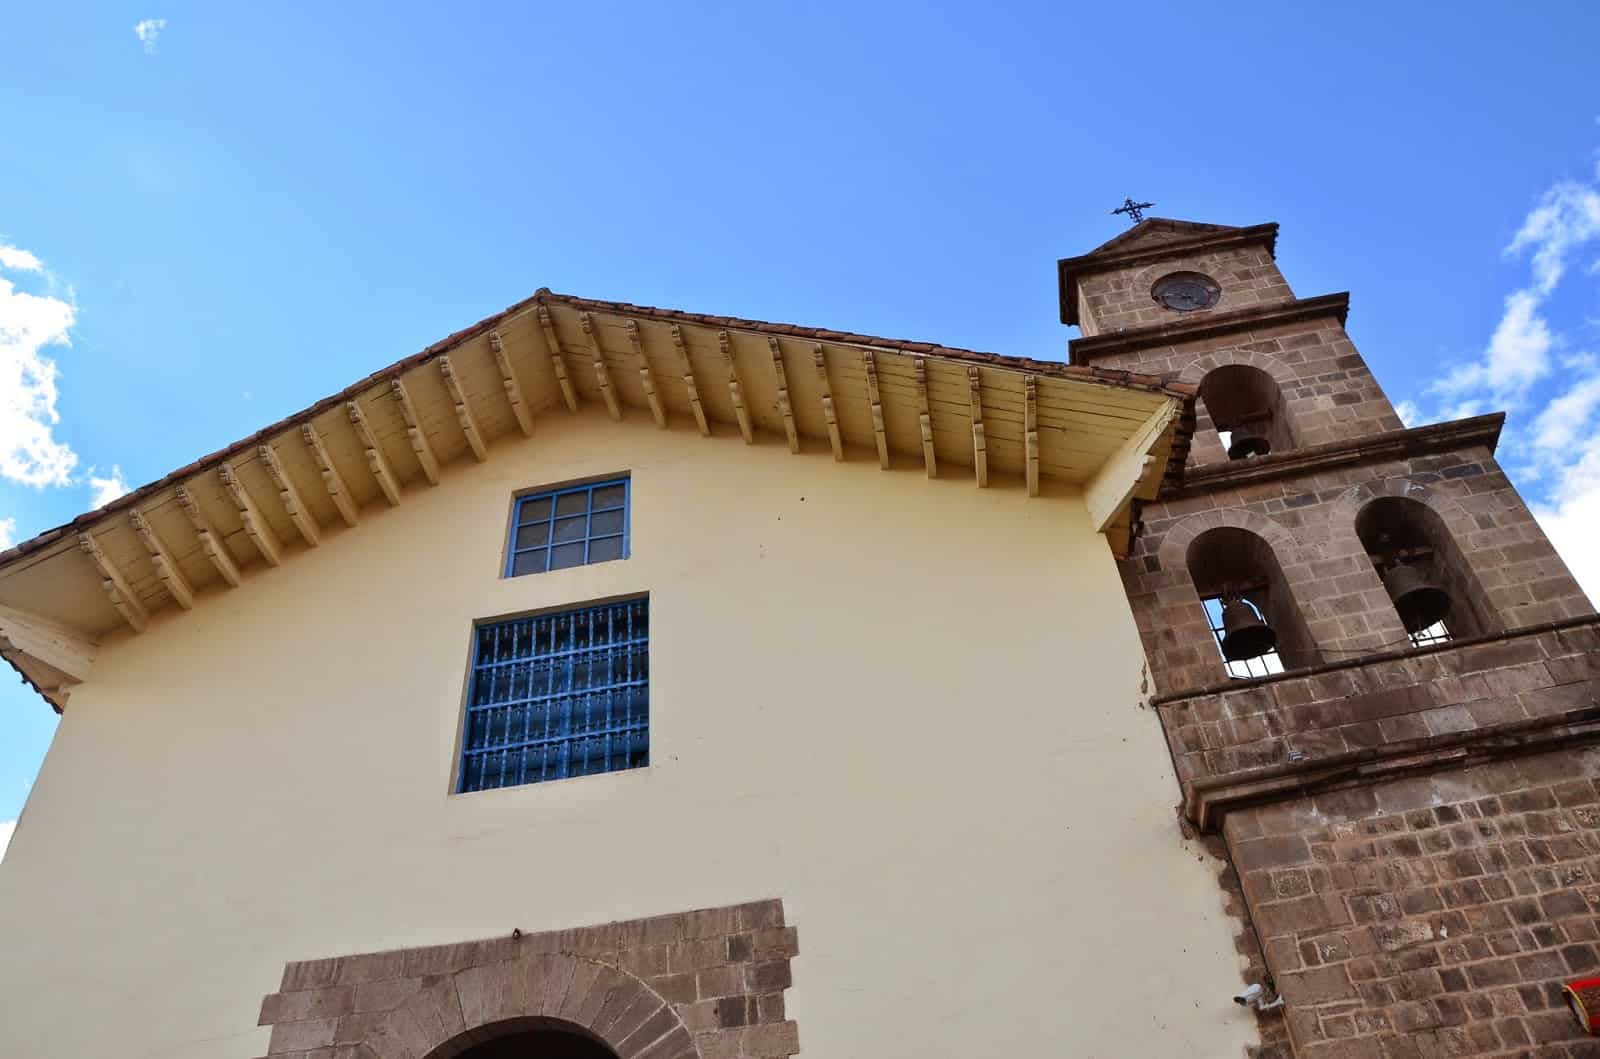 Iglesia de San Blas in San Blas, Cusco, Peru